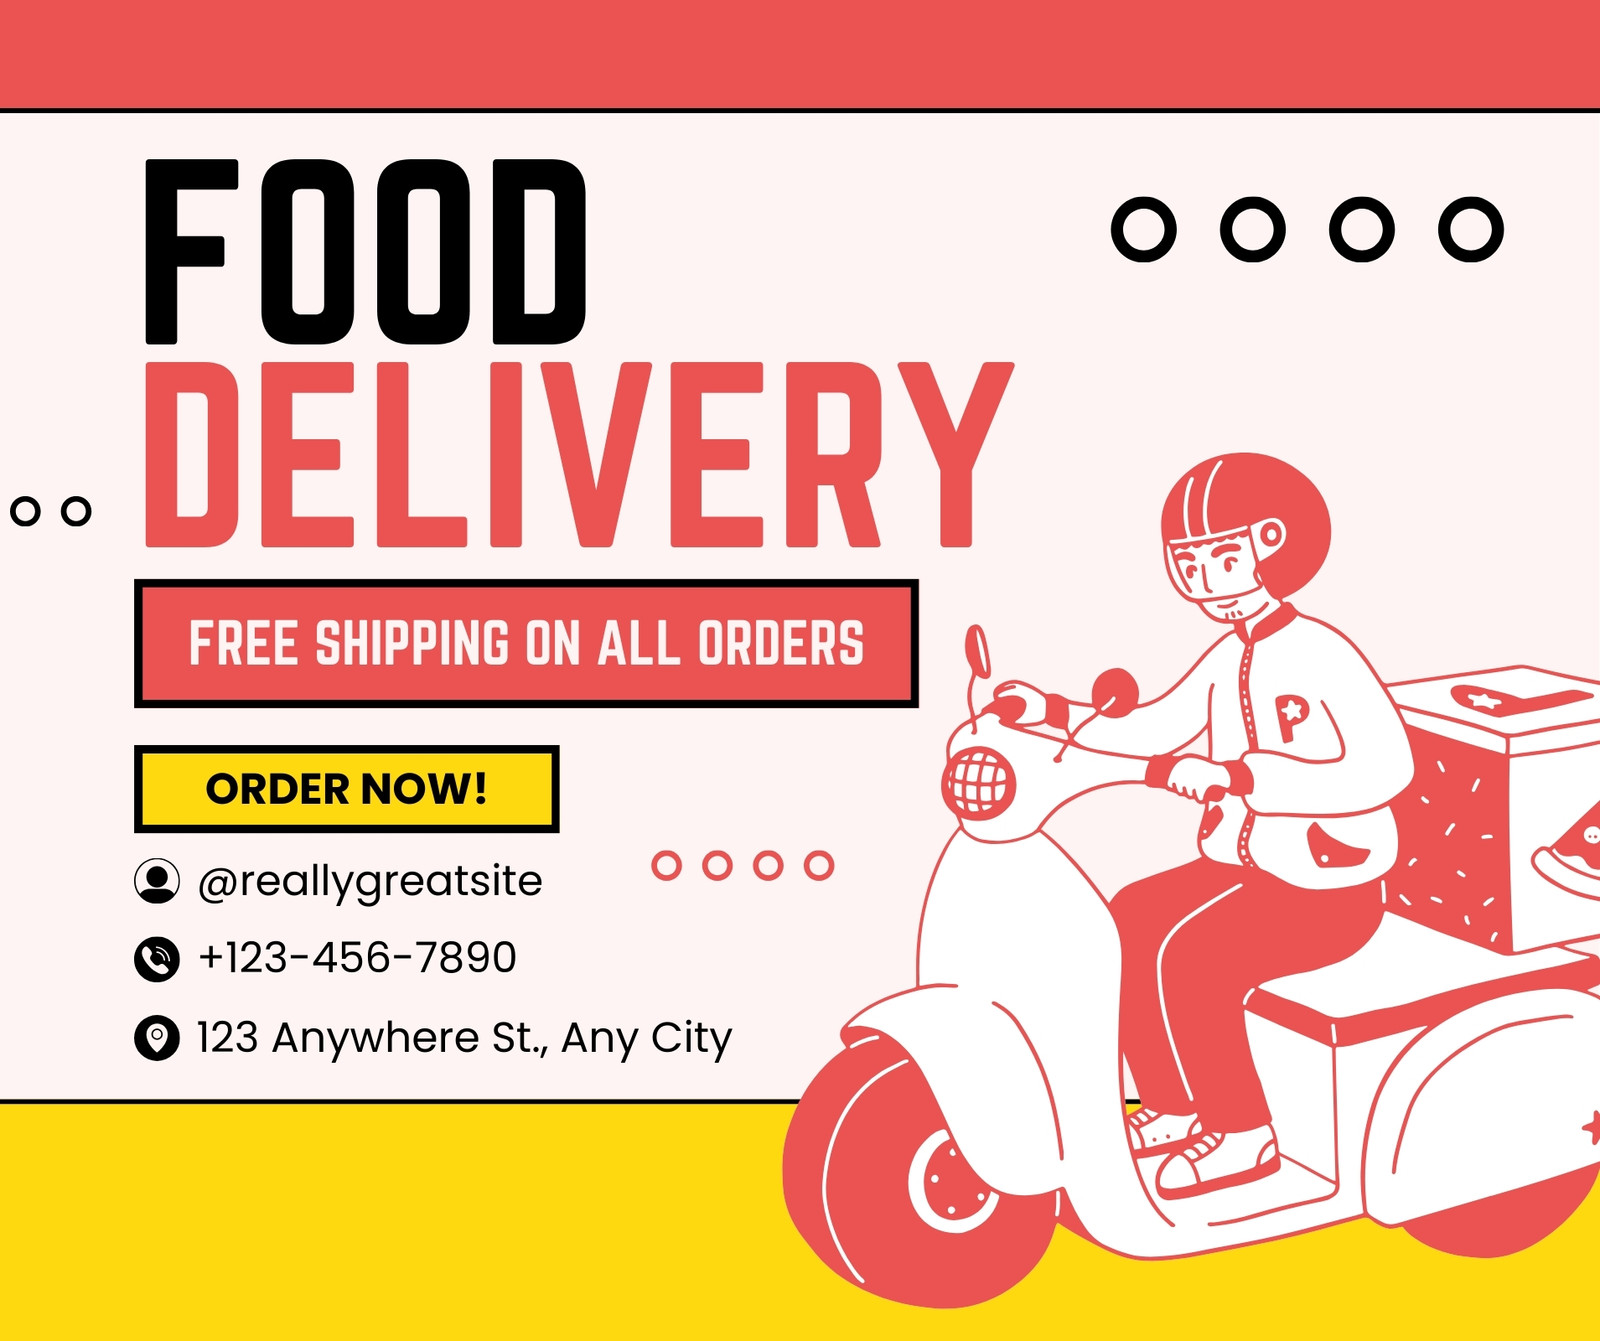 food delivery  Food delivery, Food delivery logo, Food poster design